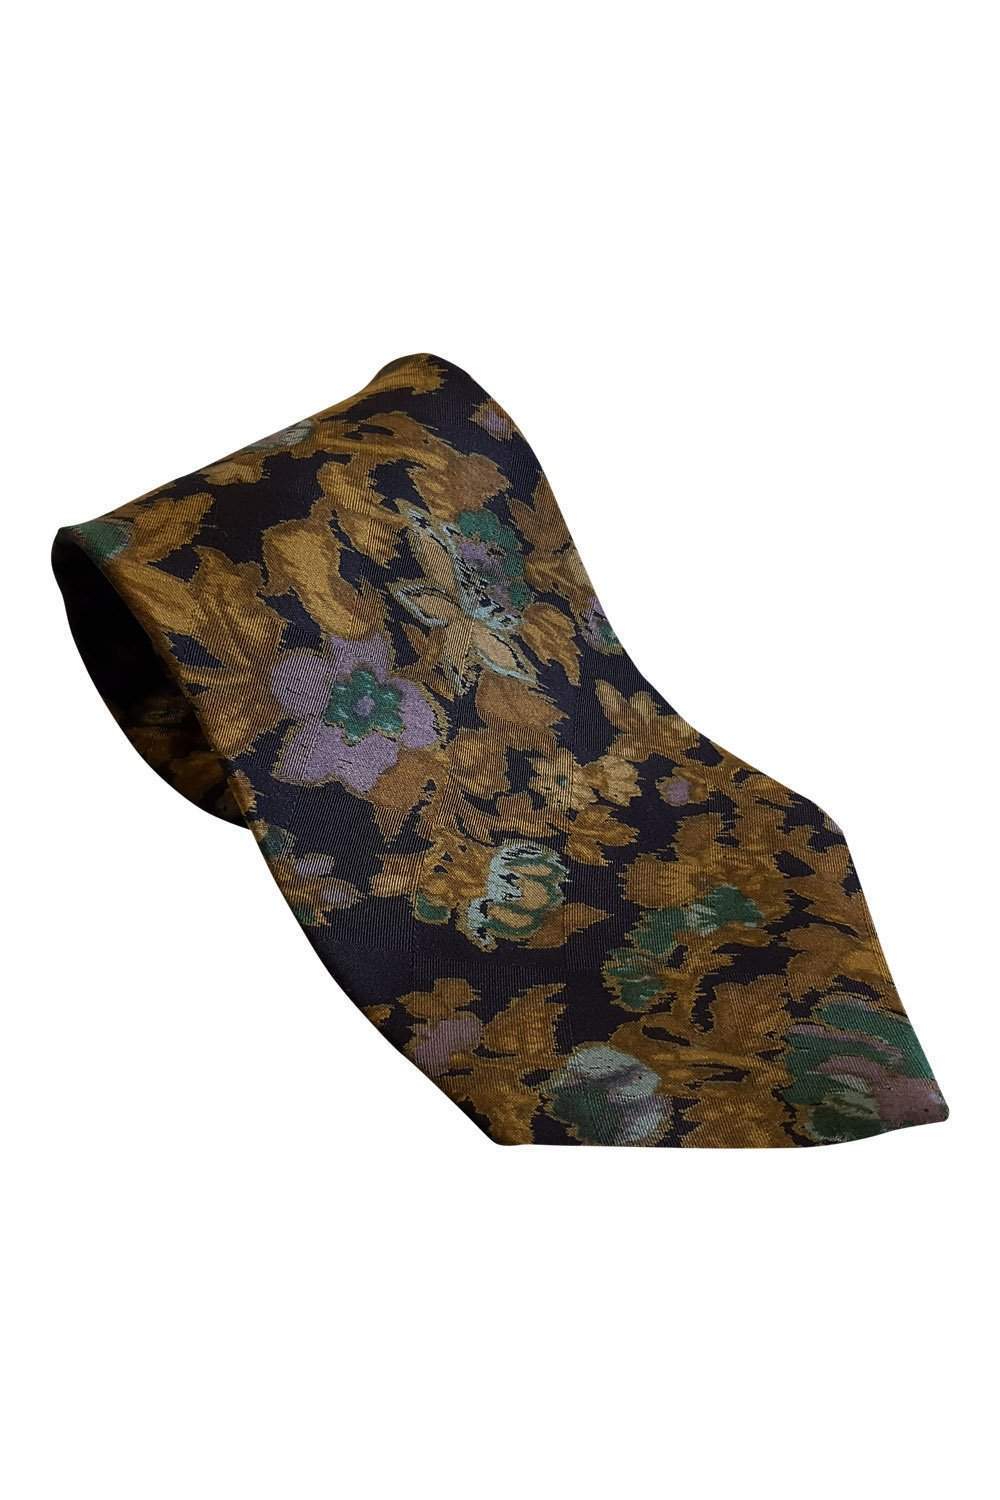 FUMAGALLI'S Vintage Silk Black Floral Print Tie-Fumagalli's-The Freperie